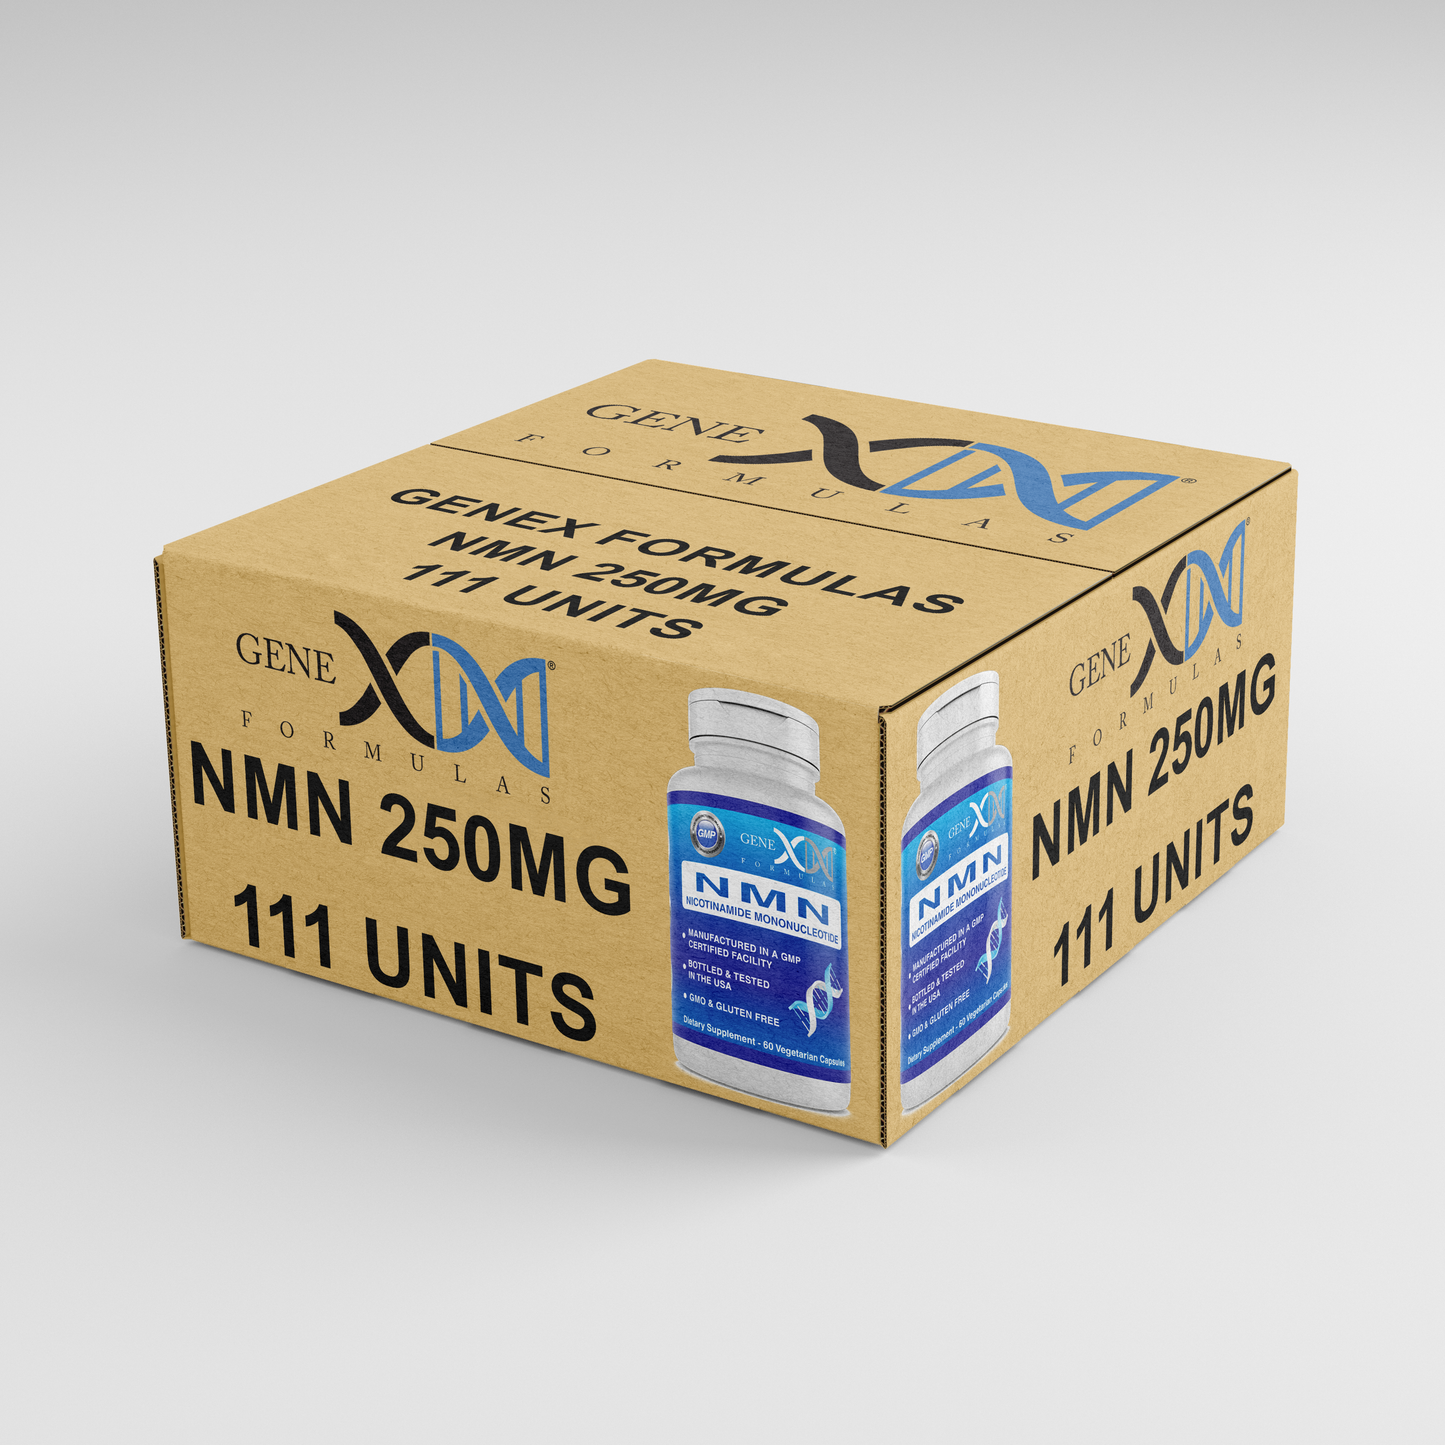 Genex Formulas NMN 250mg CASE (111 Units)